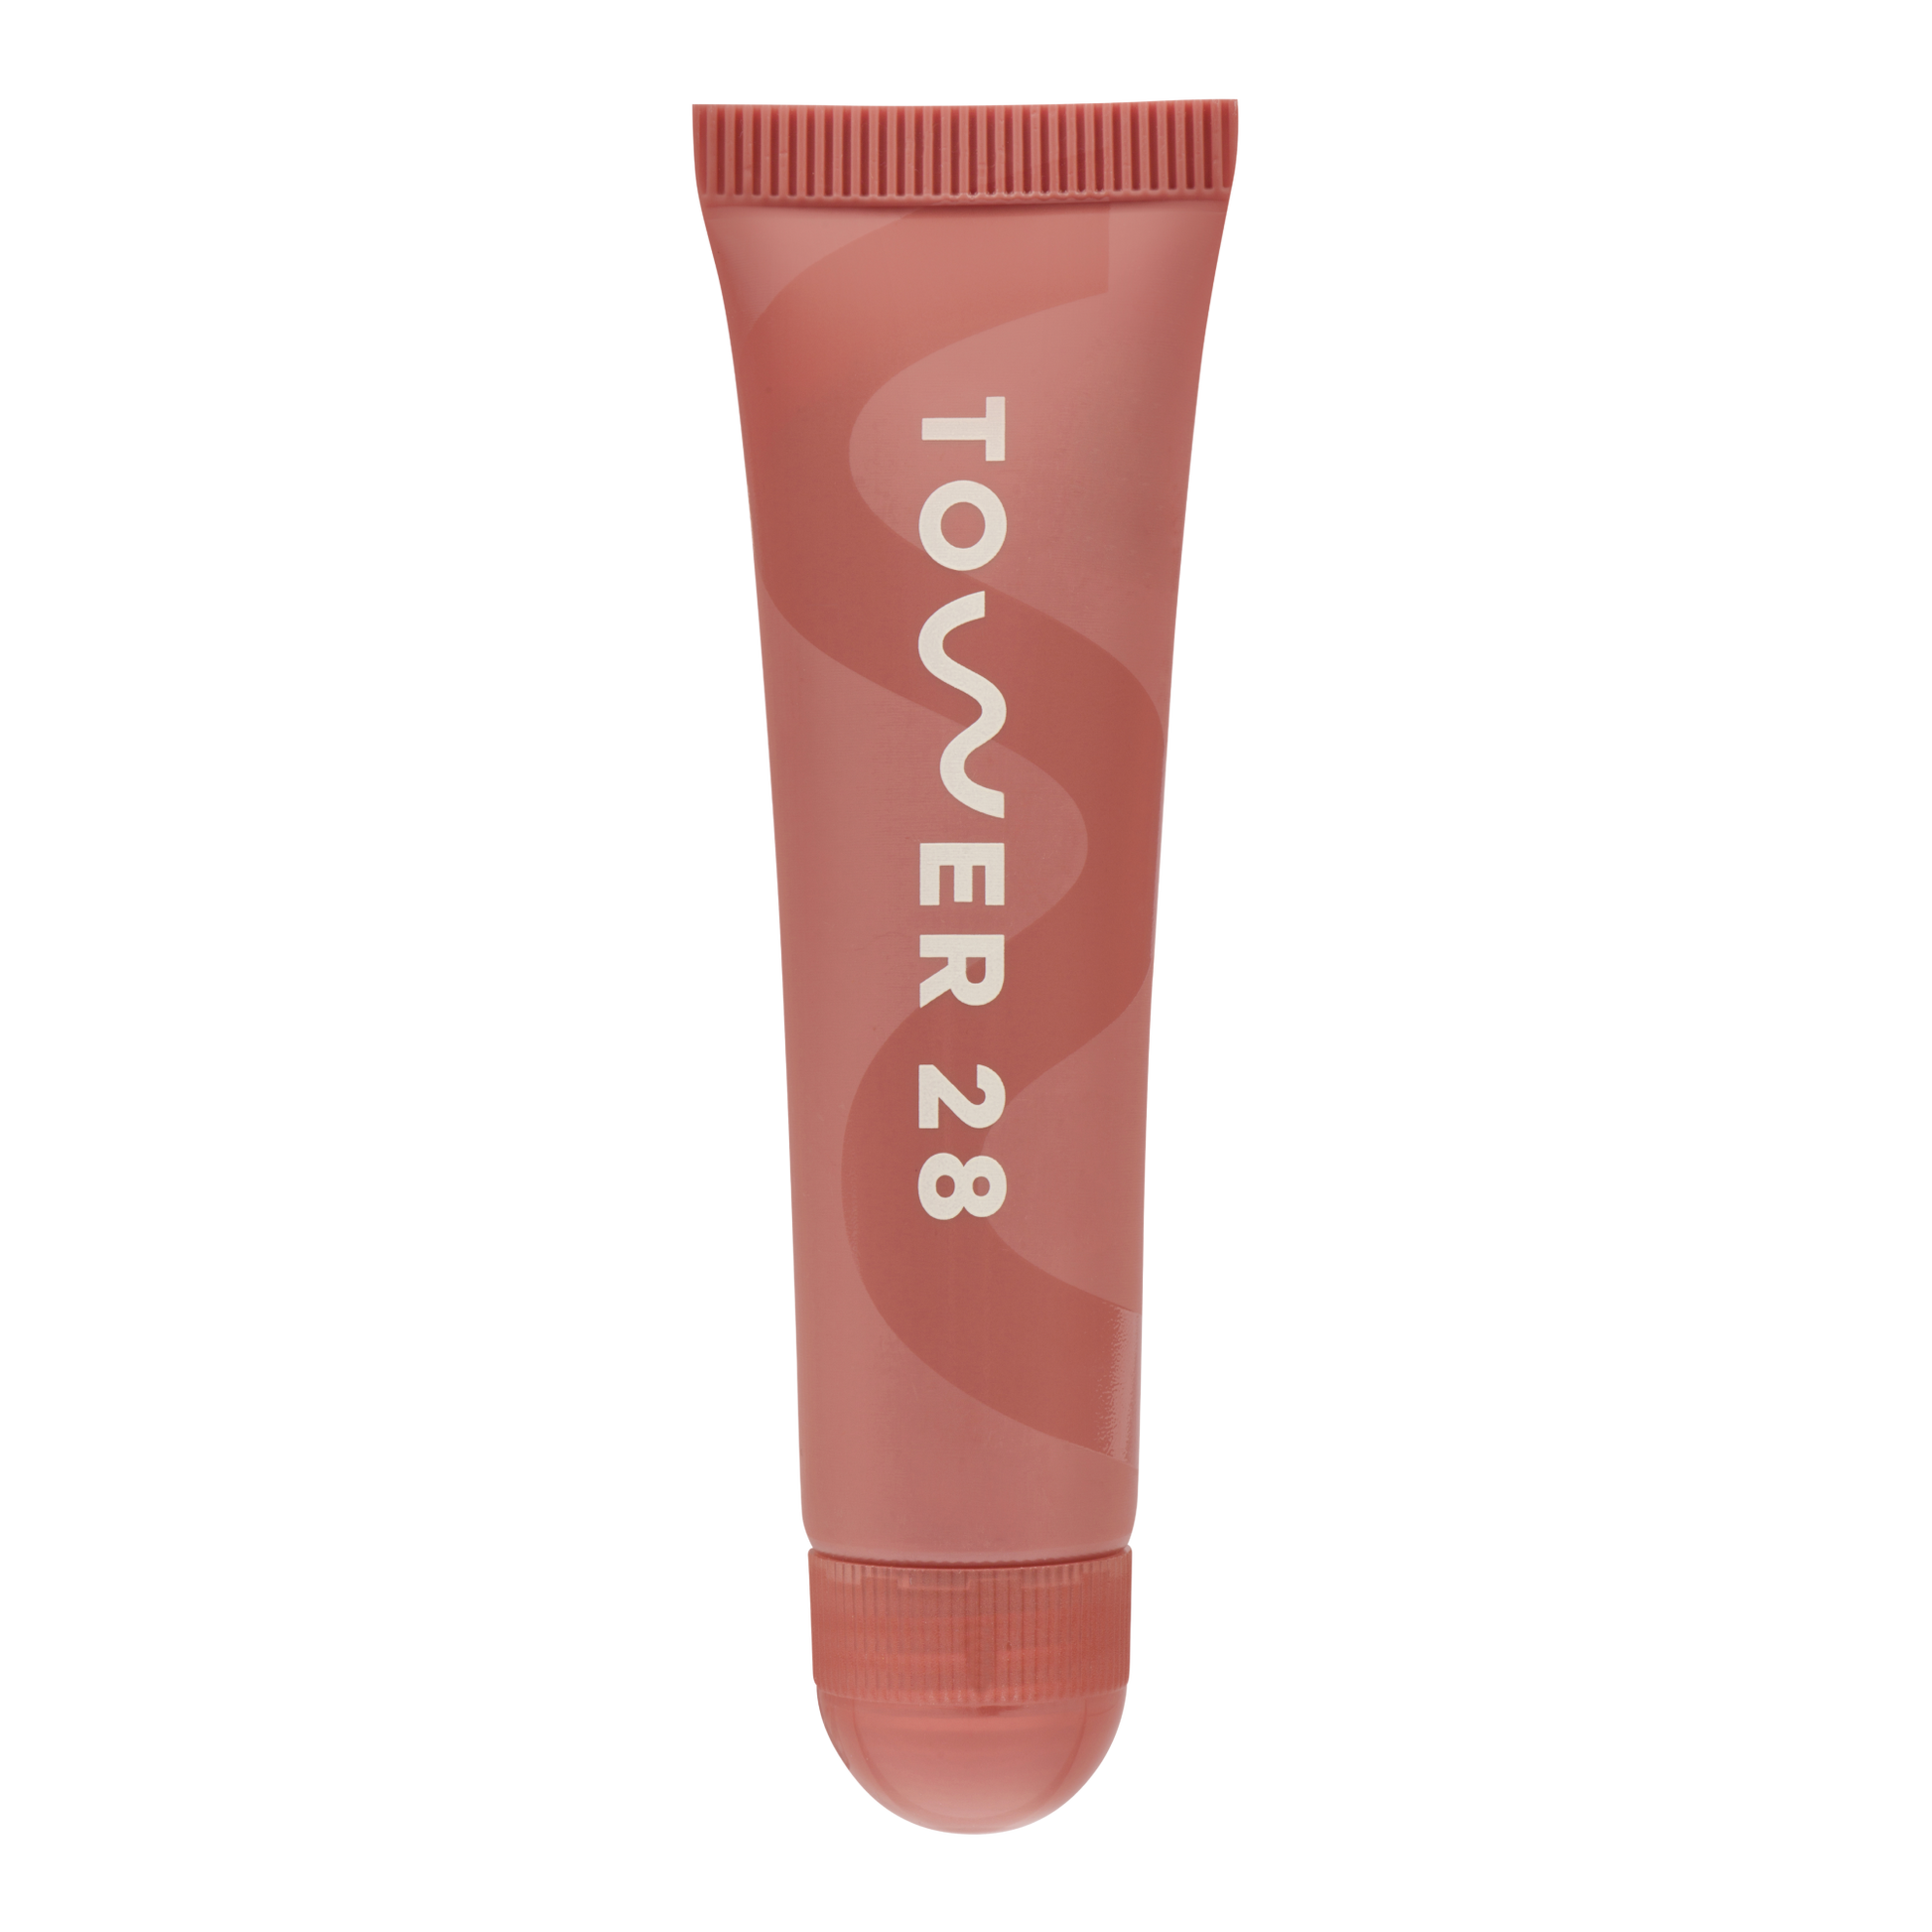 The Tower 28 Beauty LipSoftie™ Lip Treatment in the shade Dulce de Leche